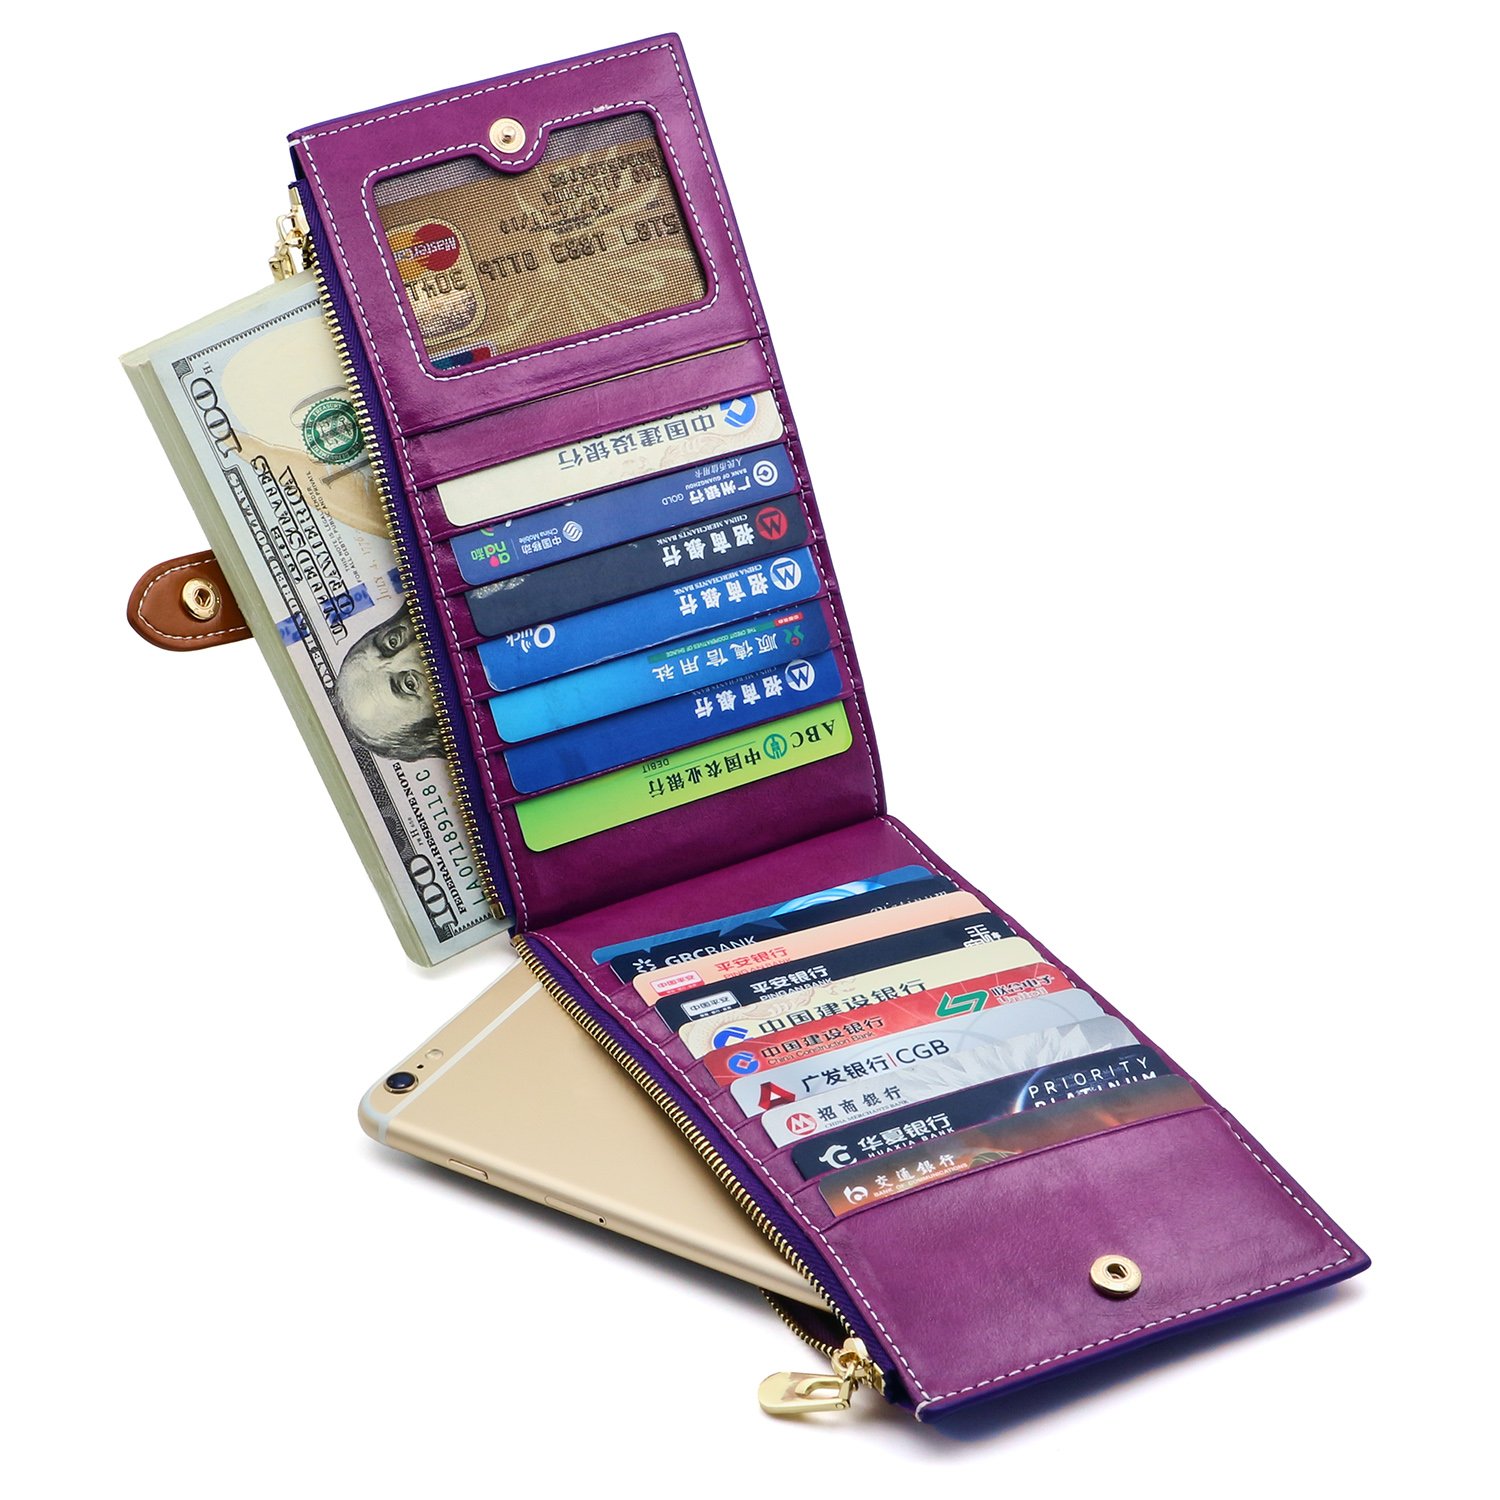 ANDOILT Women's Genuine Leather Wallet RFID Blocking Credit Card Holder Zipper Purse Cell Phone Handbag